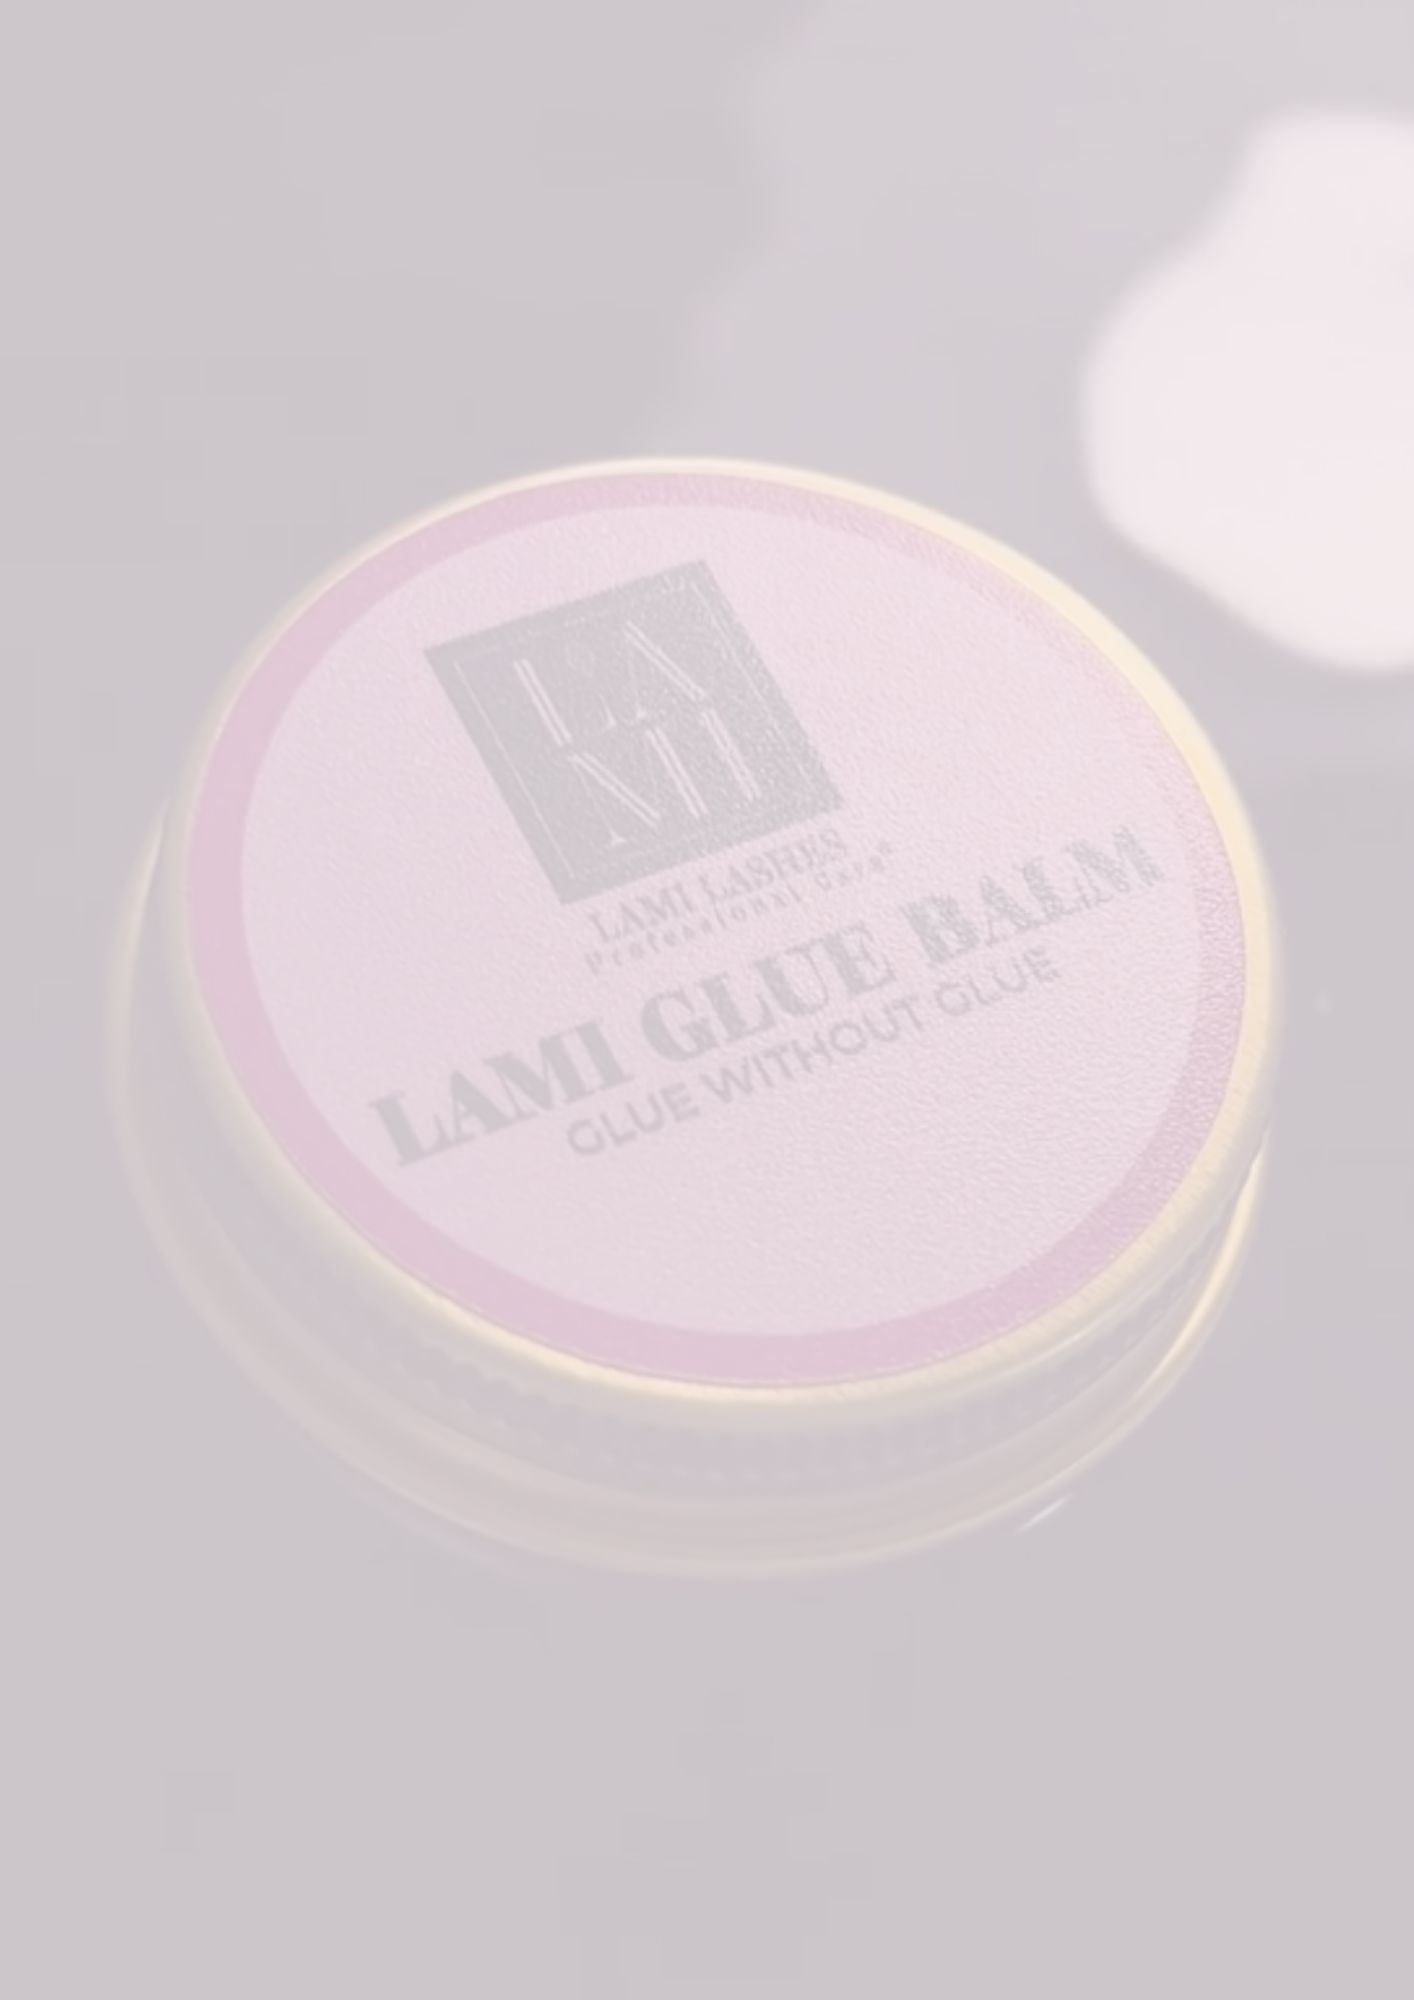 Glue balm training - compensator training - lash lift training - beauty & wellness romana